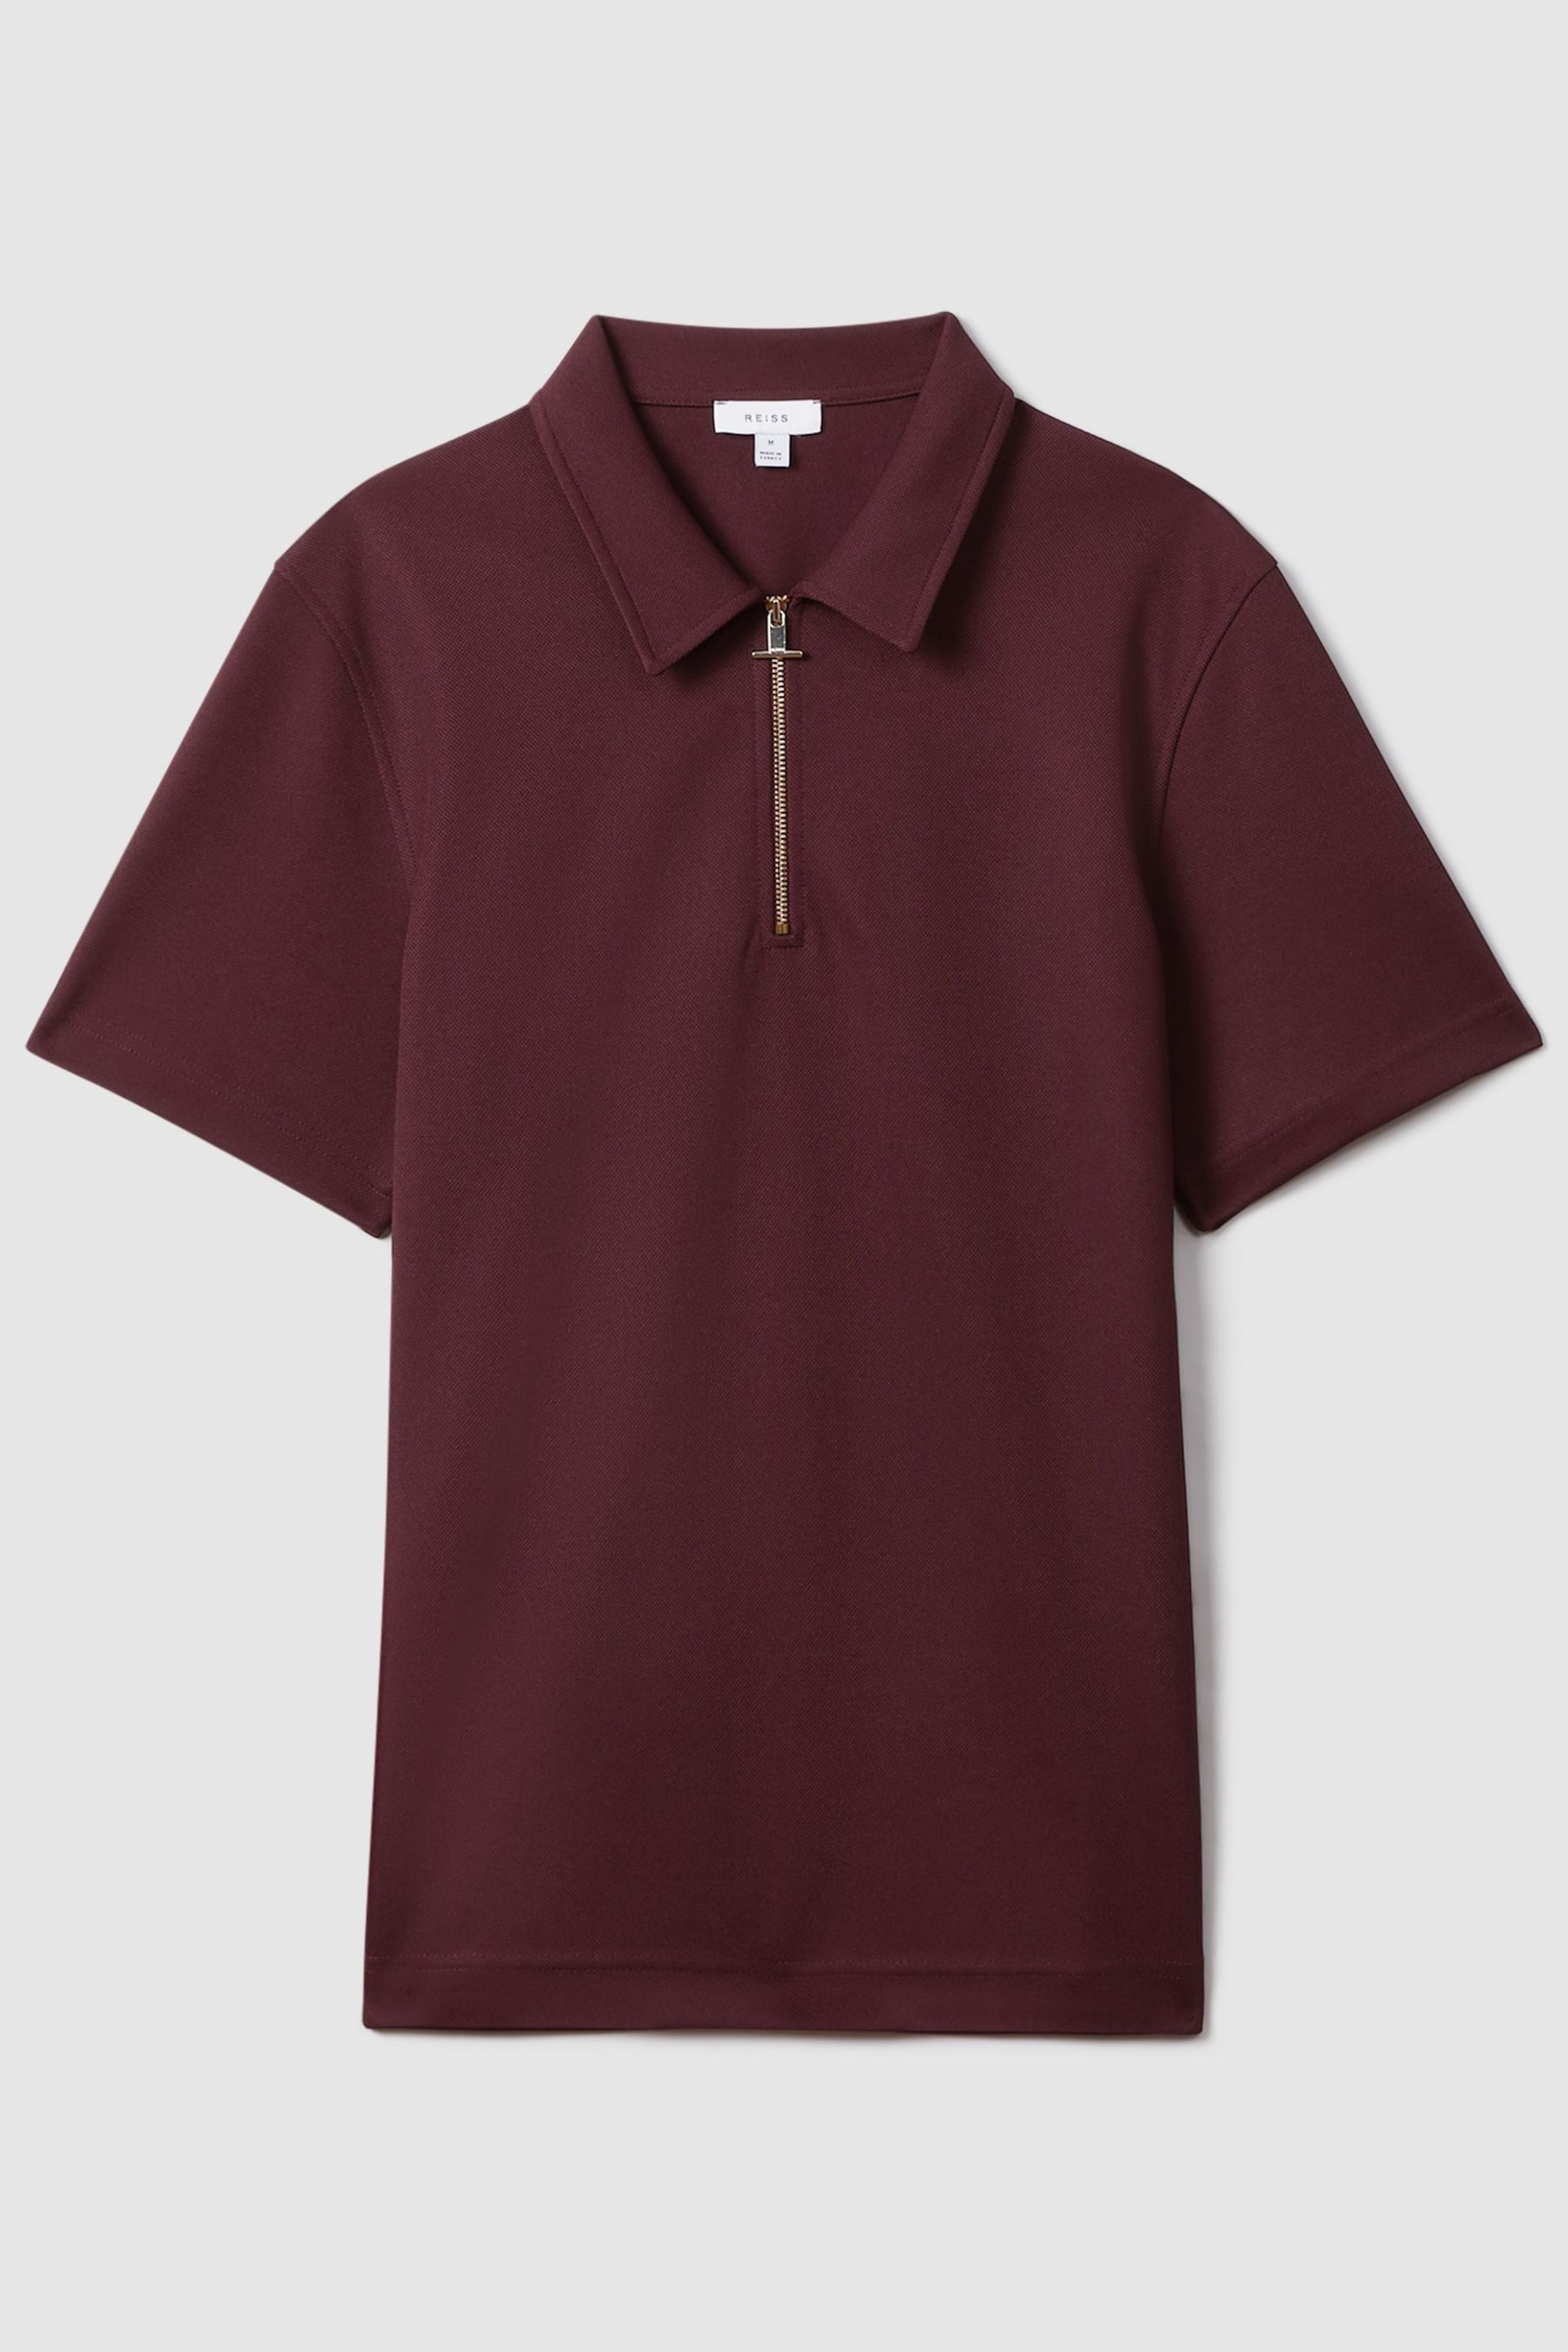 Reiss Bordeaux Floyd Slim Fit Half-Zip Polo Shirt - Image 2 of 5